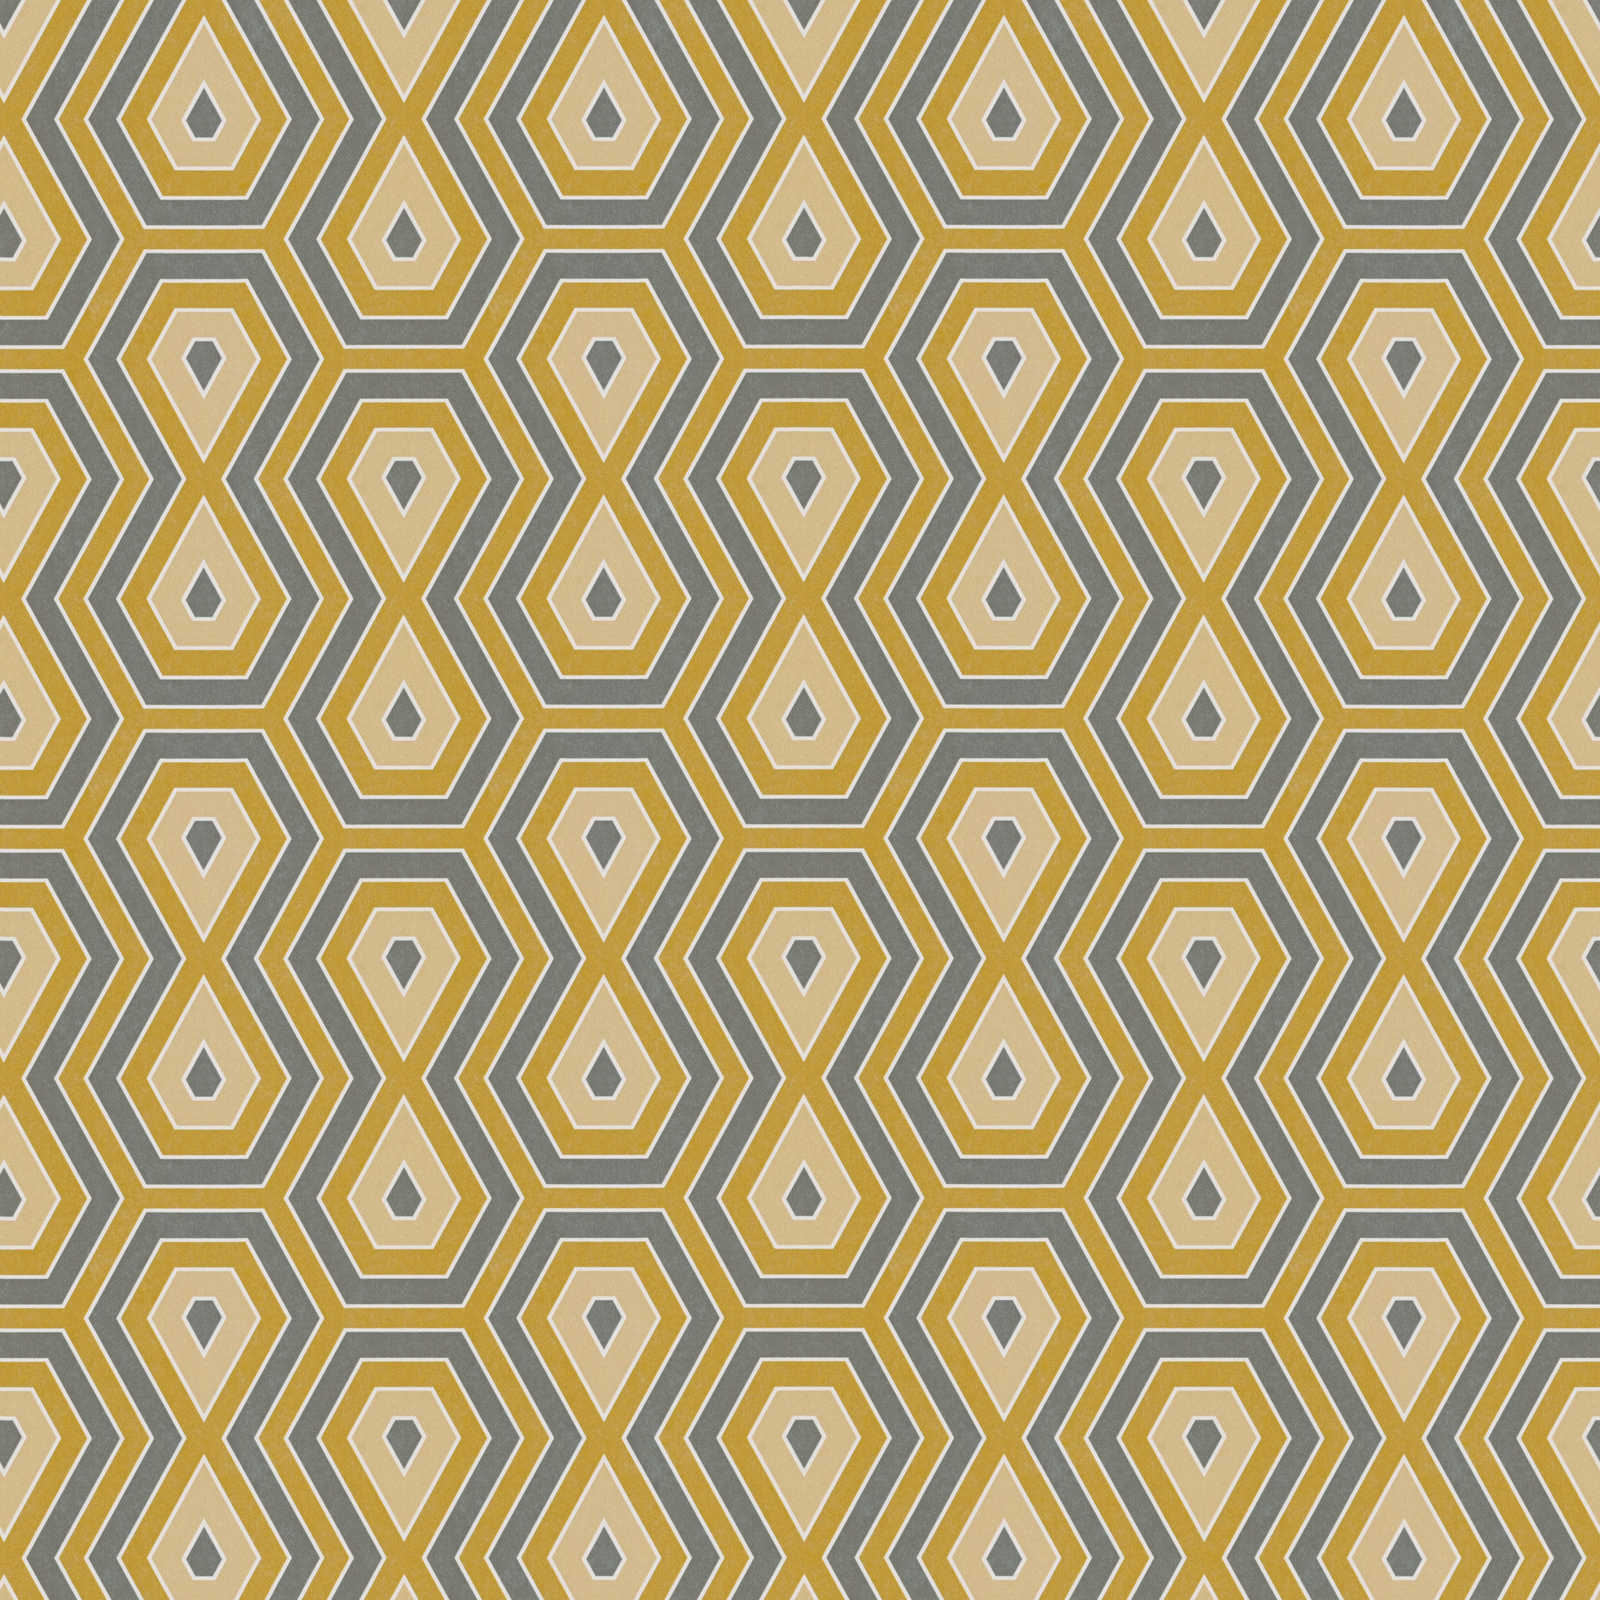         Non-woven wallpaper grey yellow 70s retro graphic pattern - yellow, grey, white
    